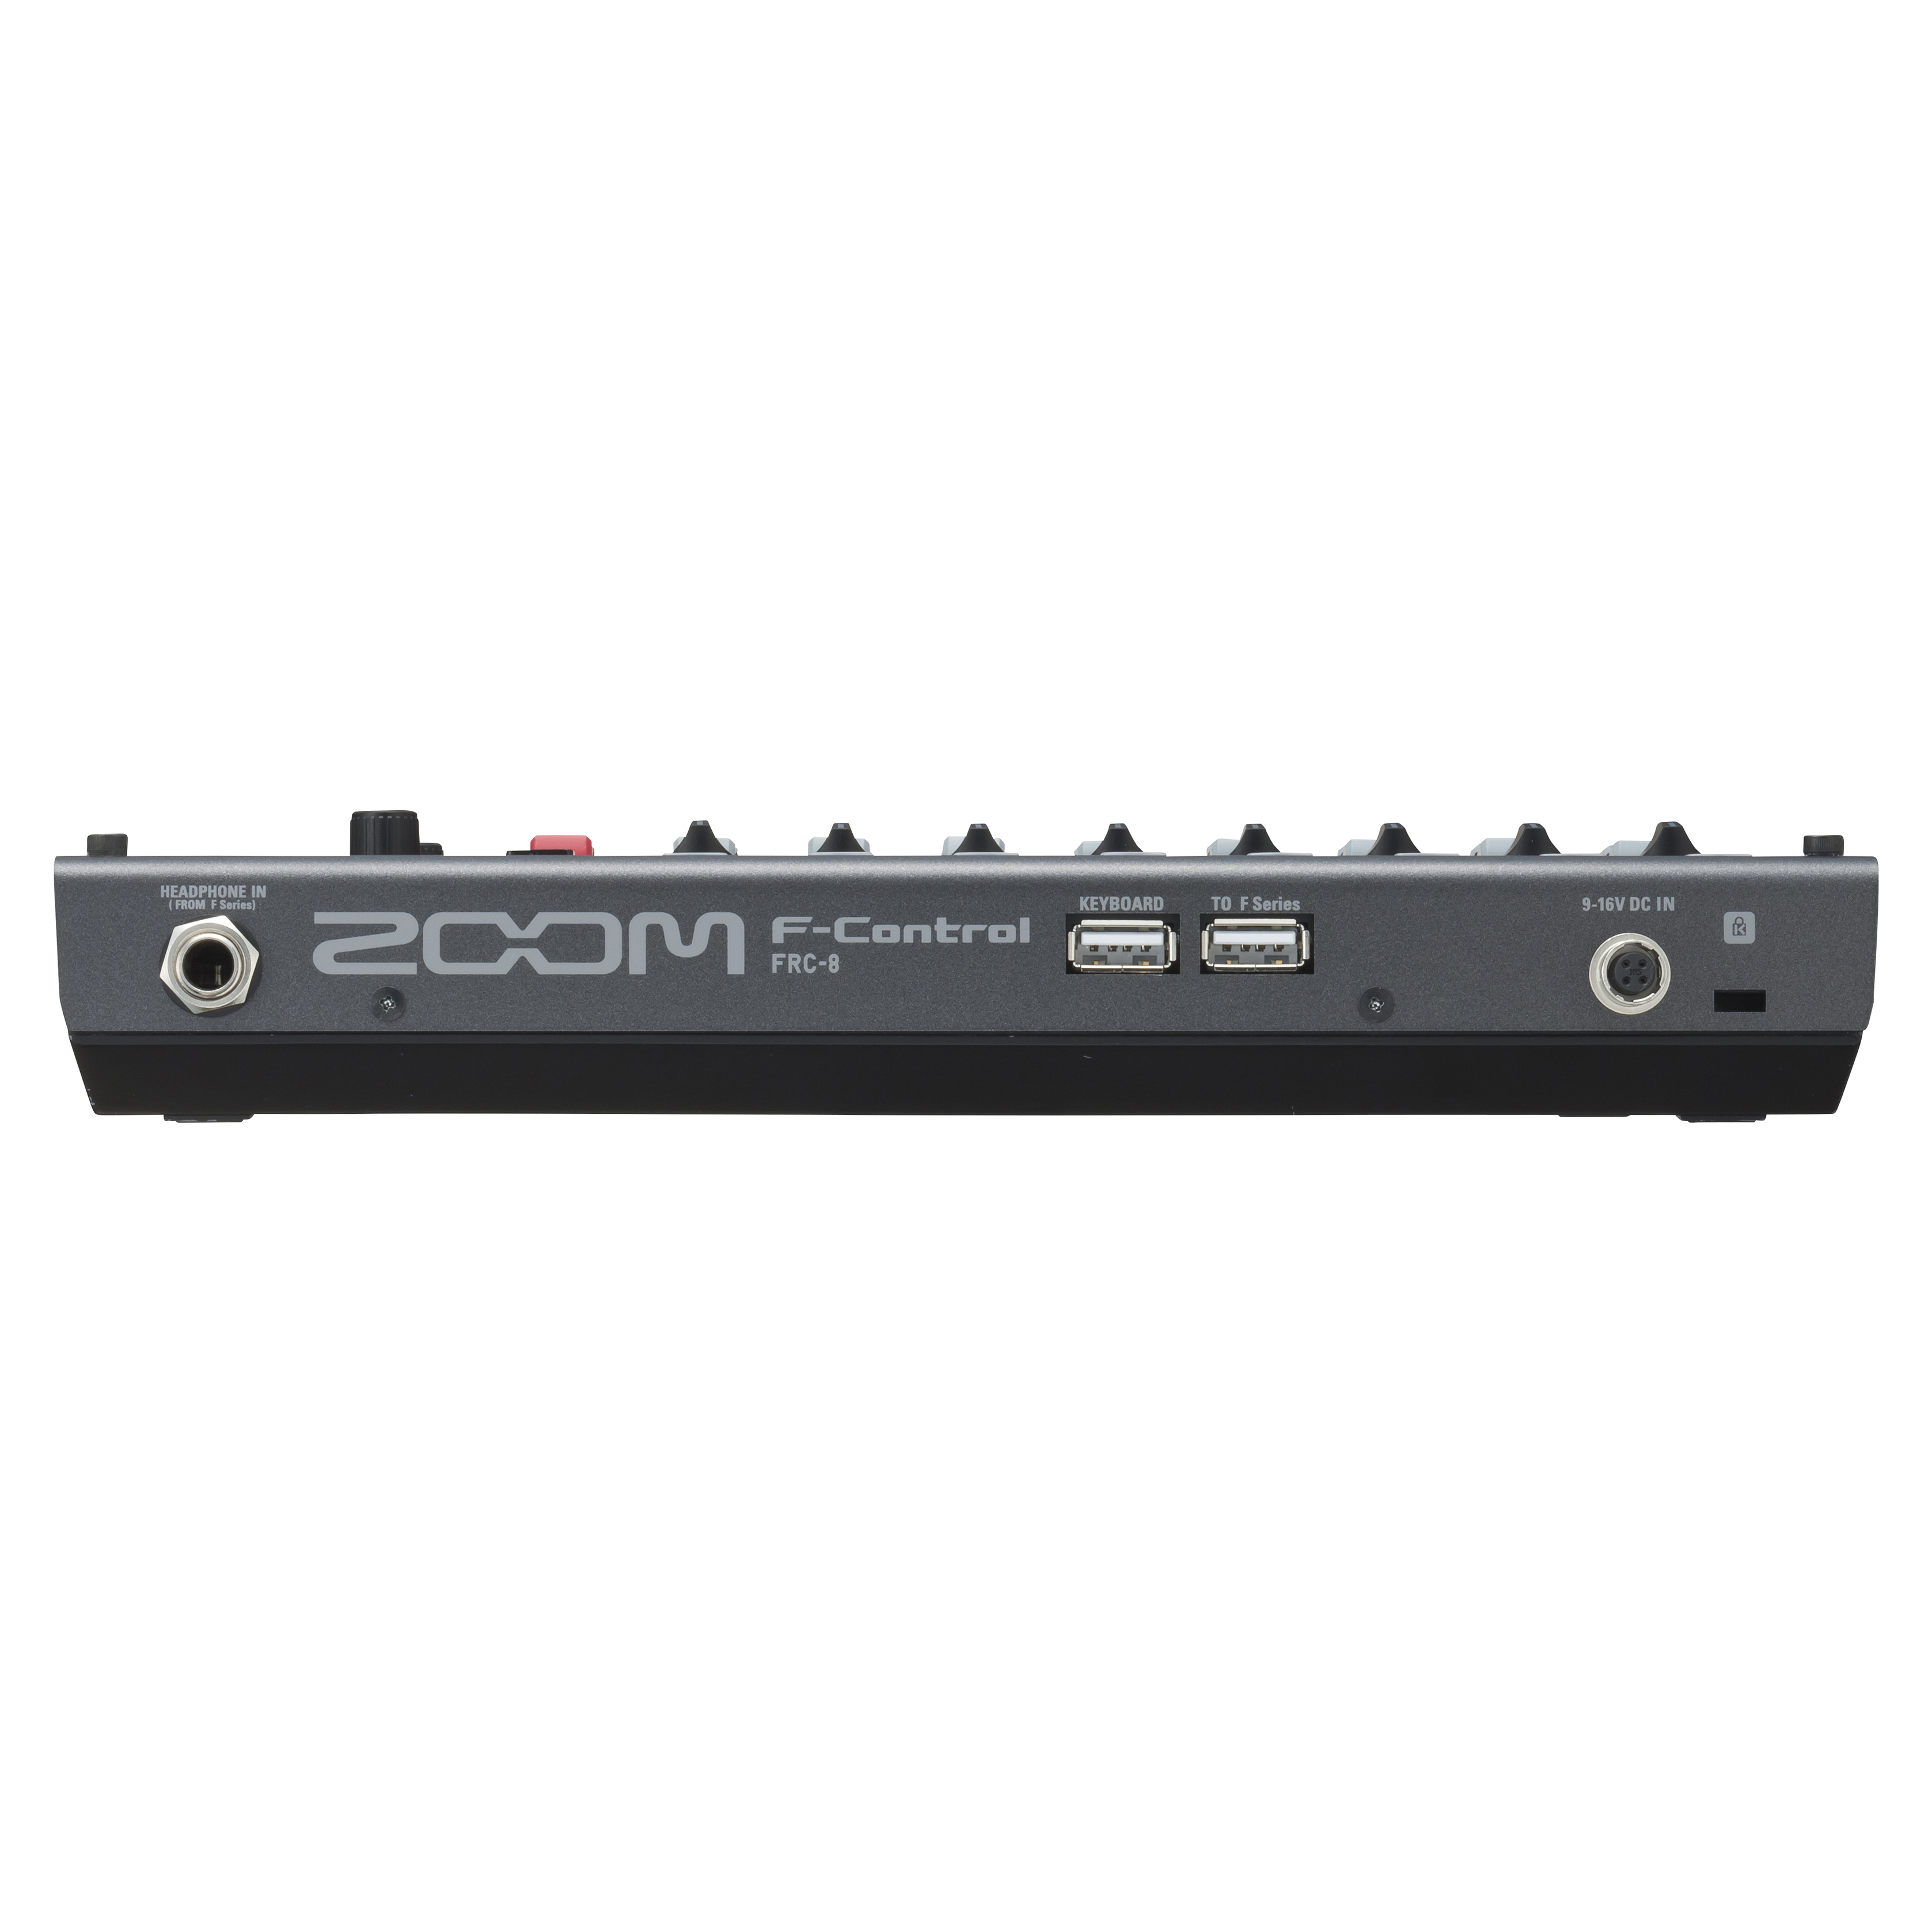 Zoom F-control Frc-8 - Multi tracks opnemer - Variation 2